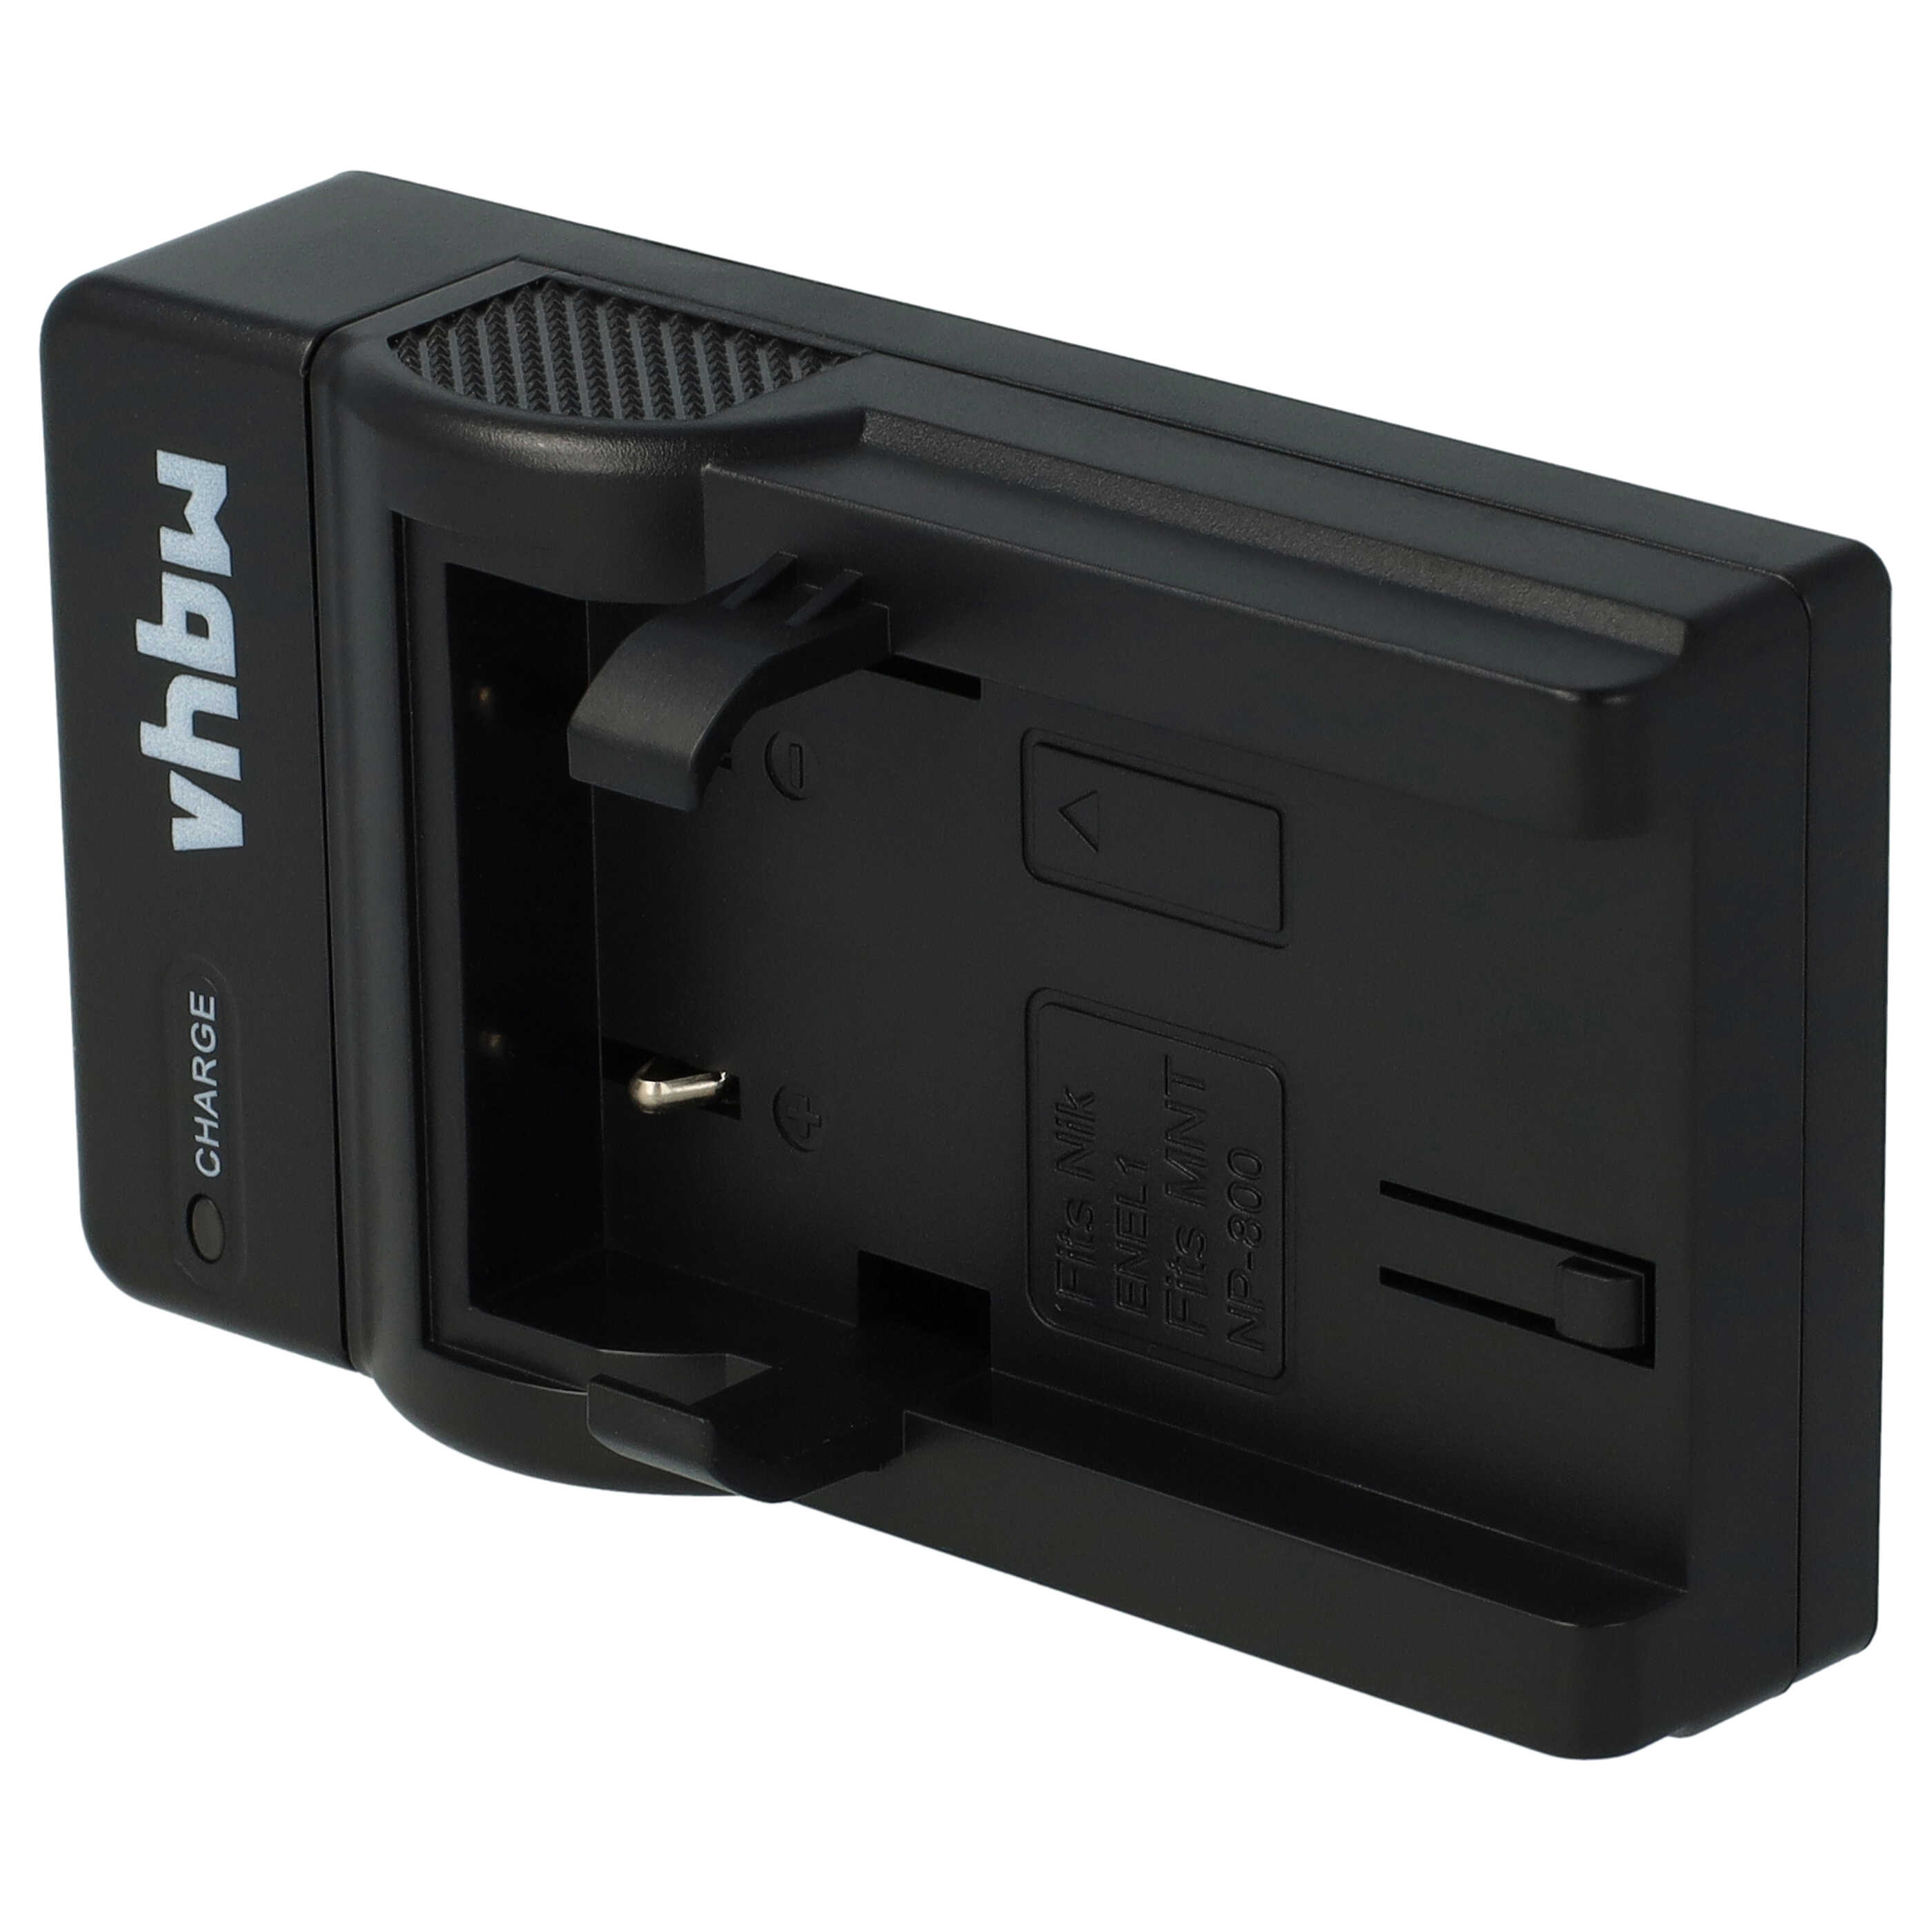 Akku Ladegerät passend für Coolpix E880 Kamera u.a. - 0,5 A, 8,4 V